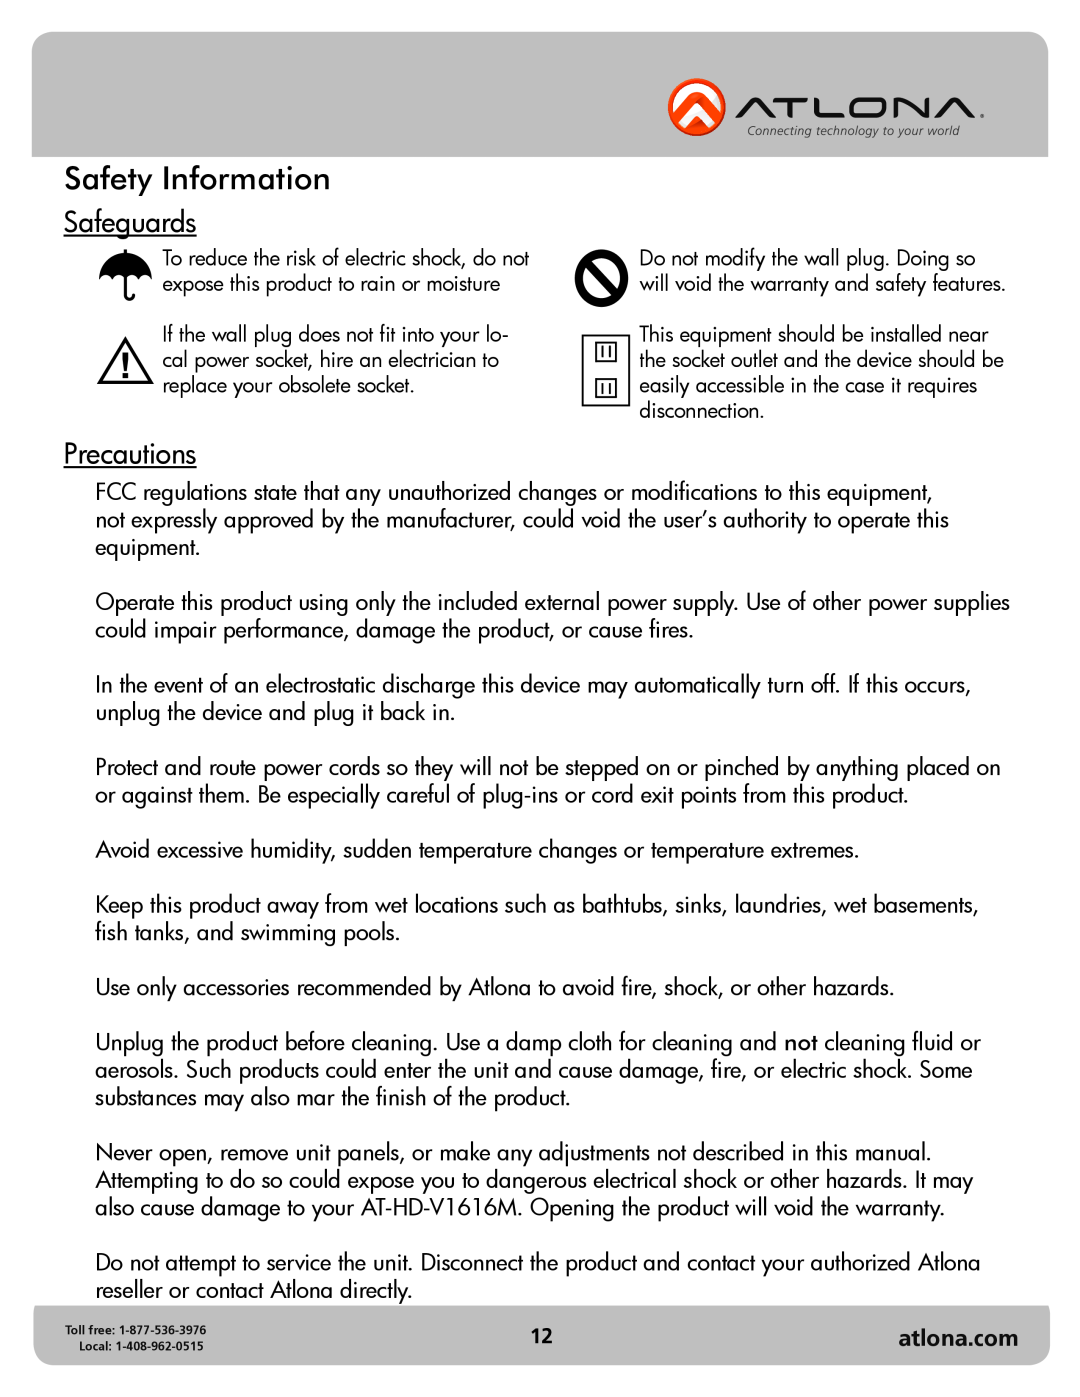 Atlona AT-HD-V1616M user manual Safeguards, Precautions, Safety Information, atlona.com 